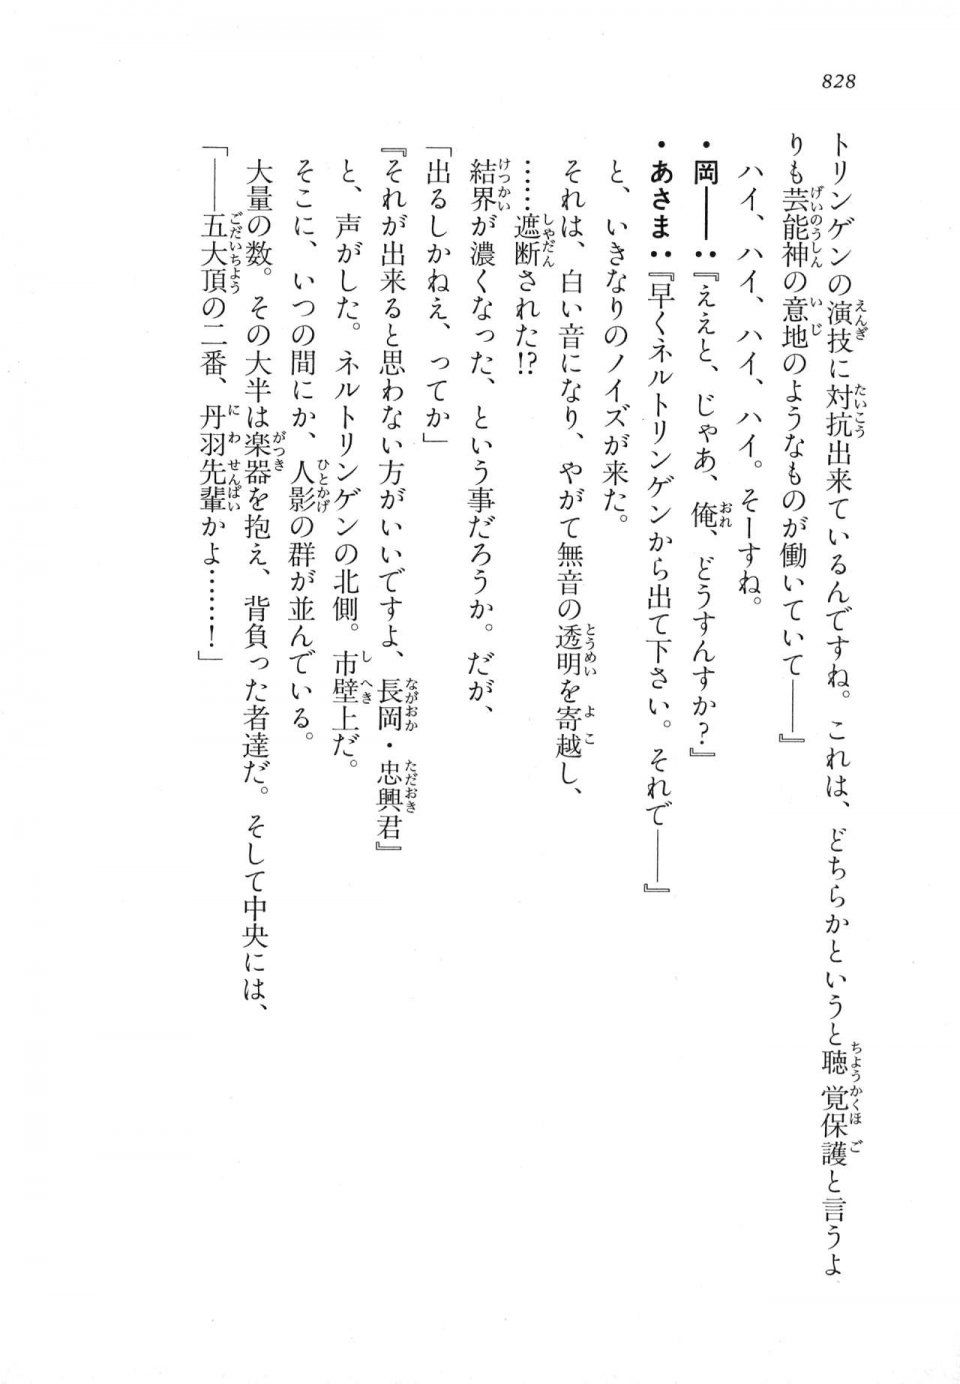 Kyoukai Senjou no Horizon LN Vol 18(7C) Part 2 - Photo #268